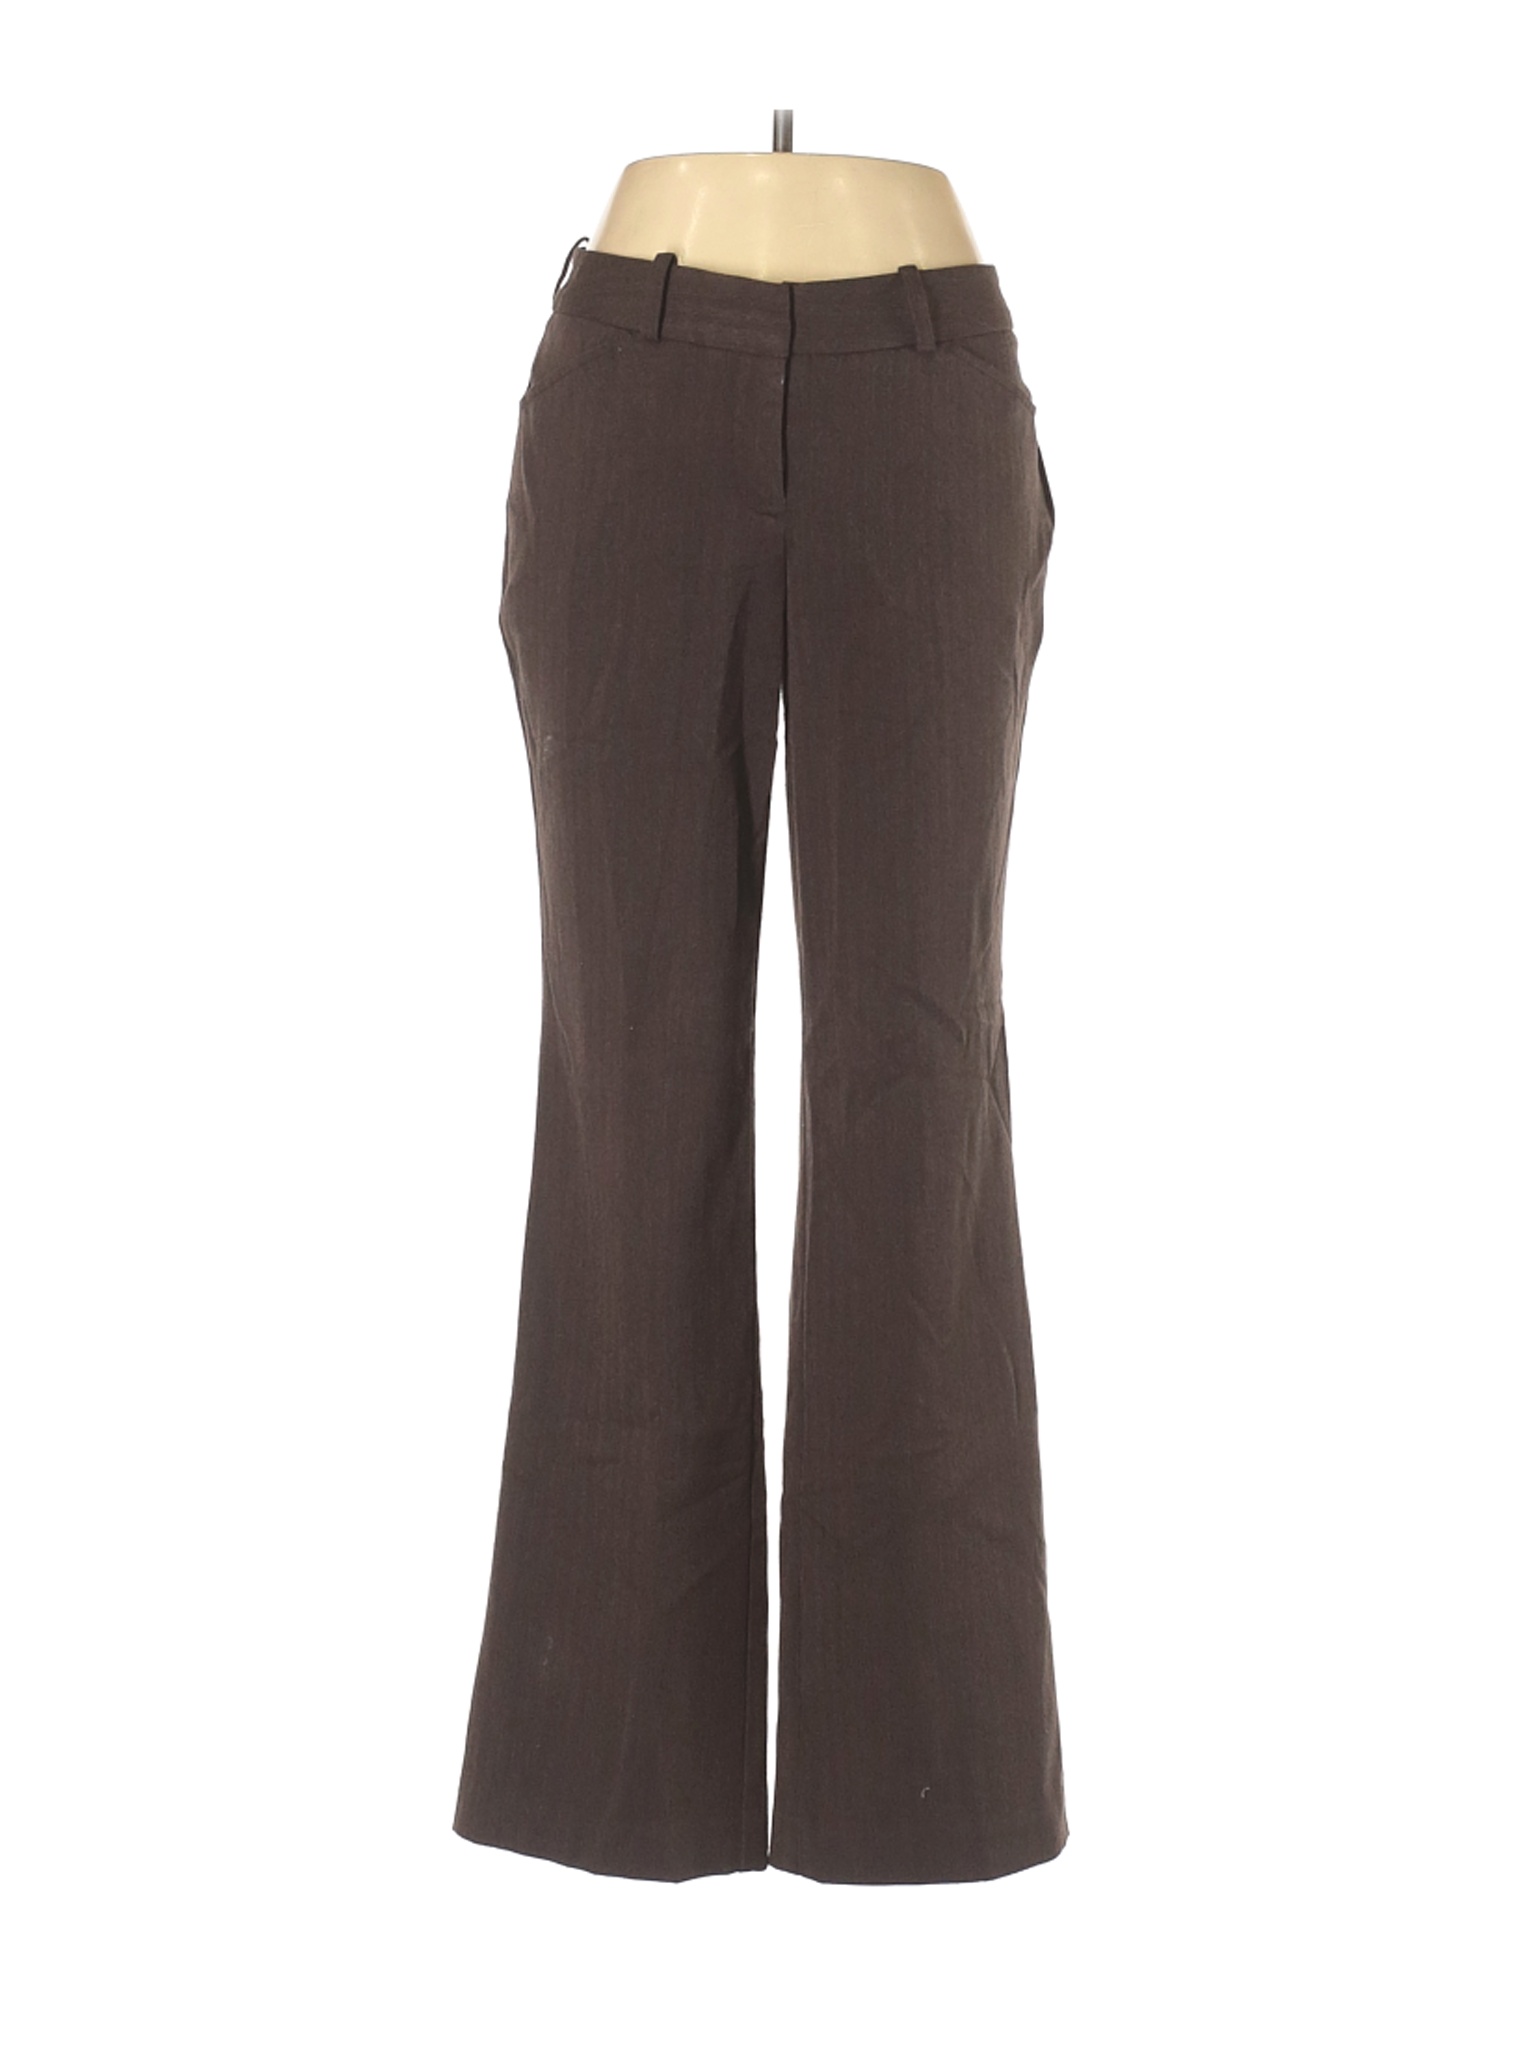 Worthington Women Brown Dress Pants 2 | eBay